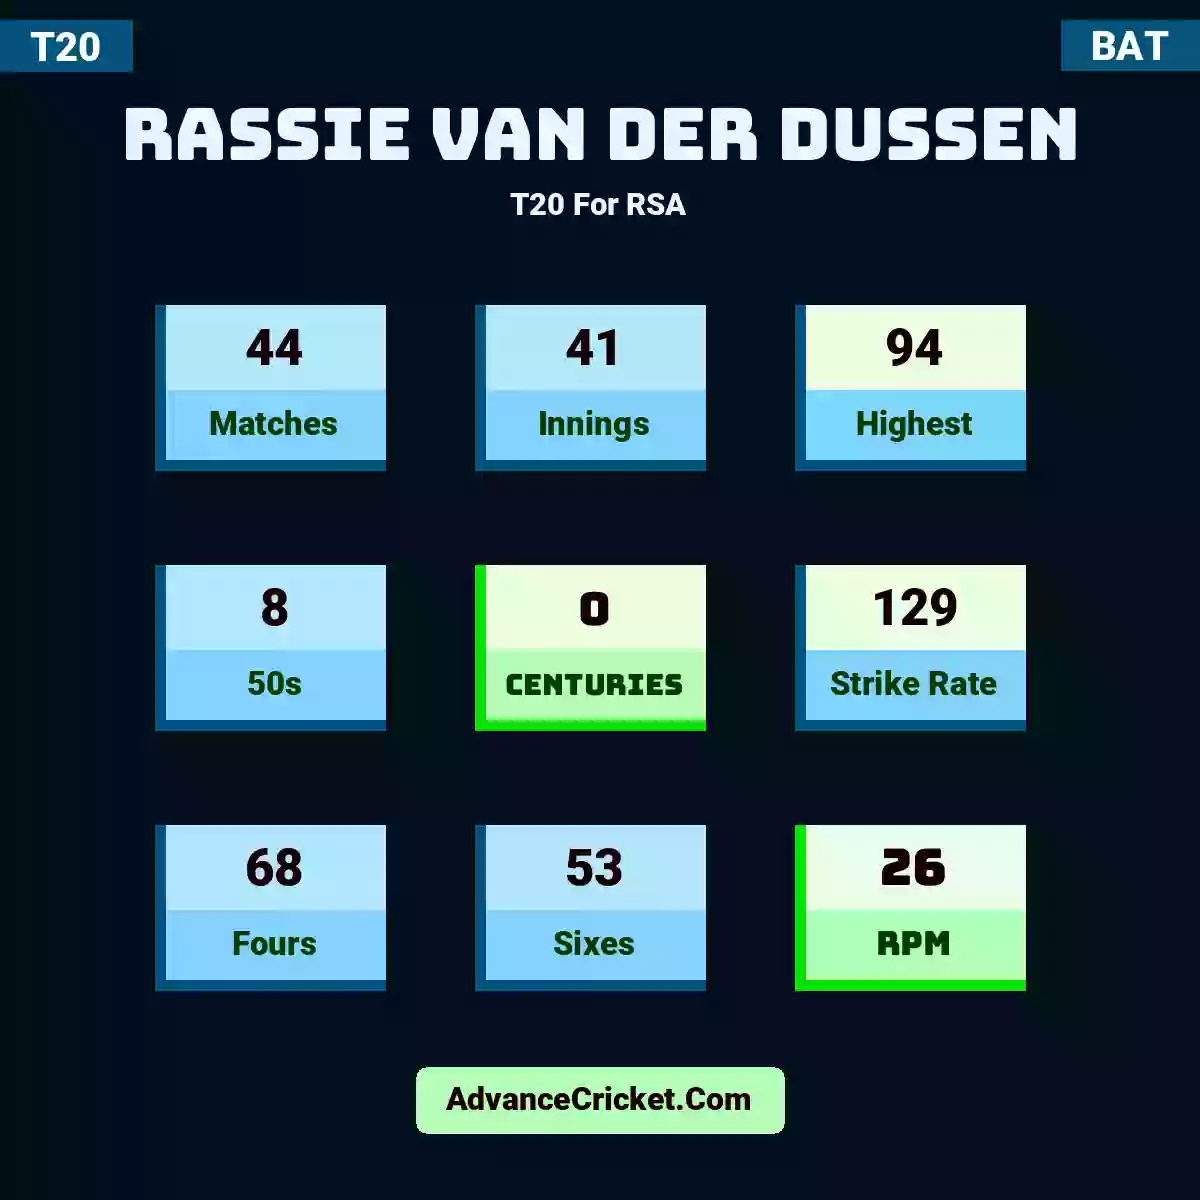 Rassie van der Dussen T20  For RSA, Rassie van der Dussen played 41 matches, scored 94 runs as highest, 7 half-centuries, and 0 centuries, with a strike rate of 128. R.Dussen hit 66 fours and 46 sixes, with an RPM of 25.